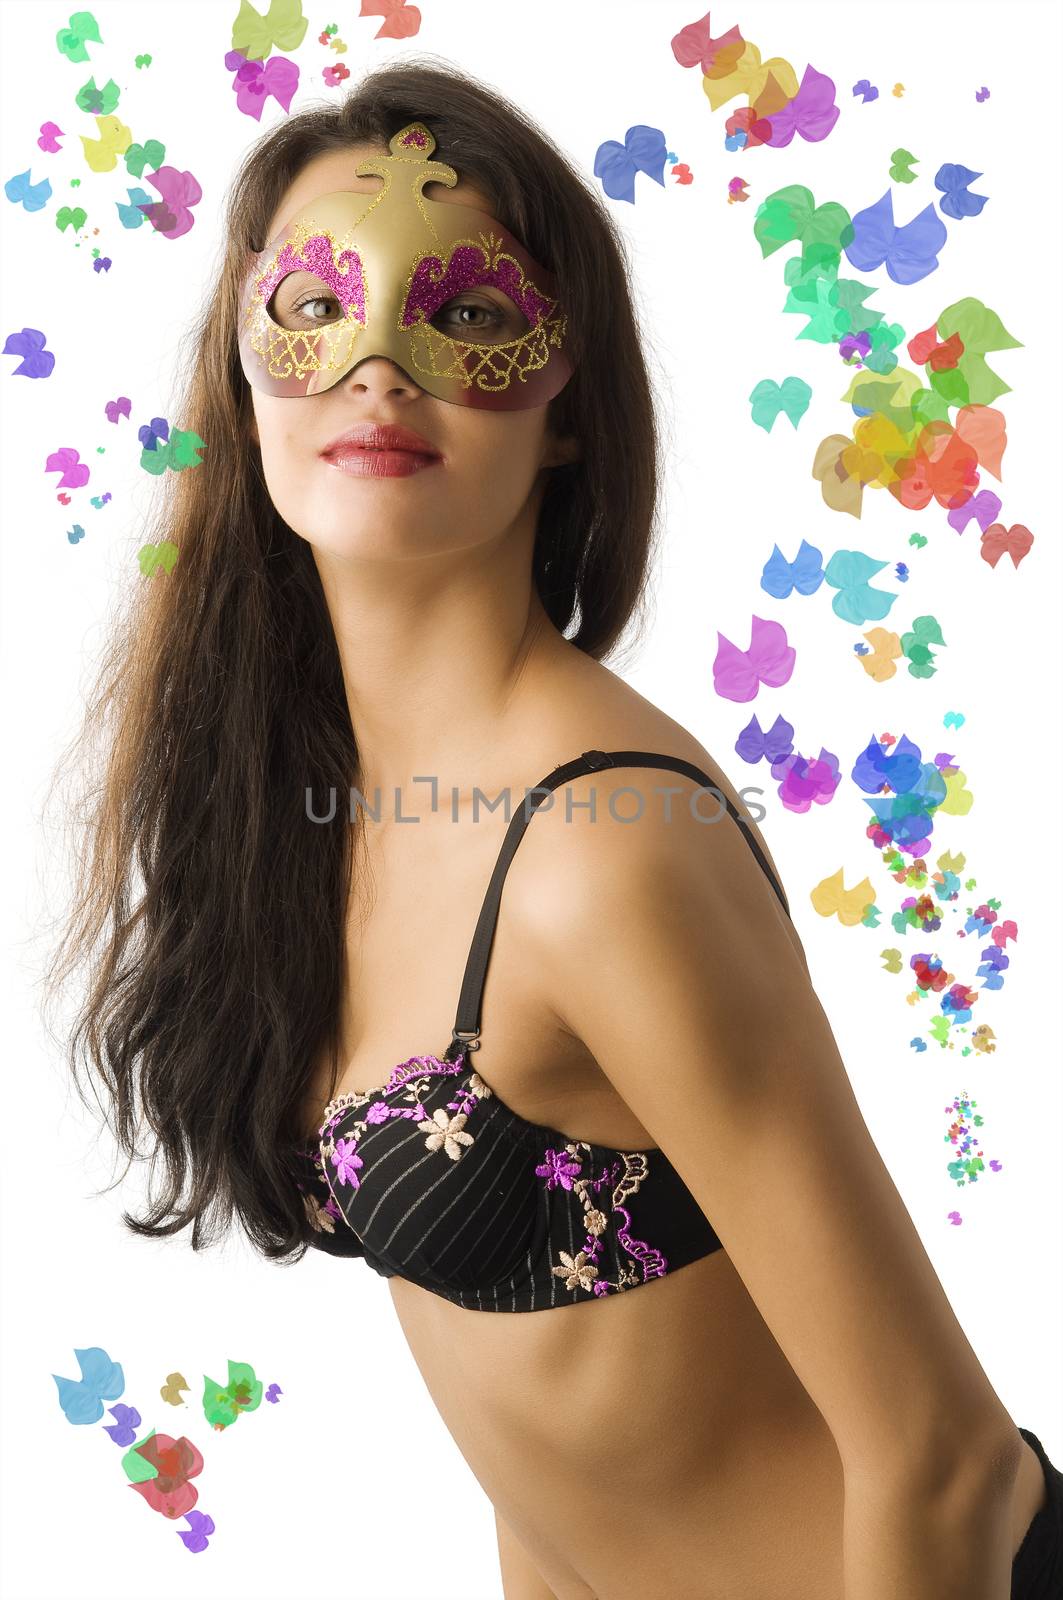 carnival lingerie by fotoCD